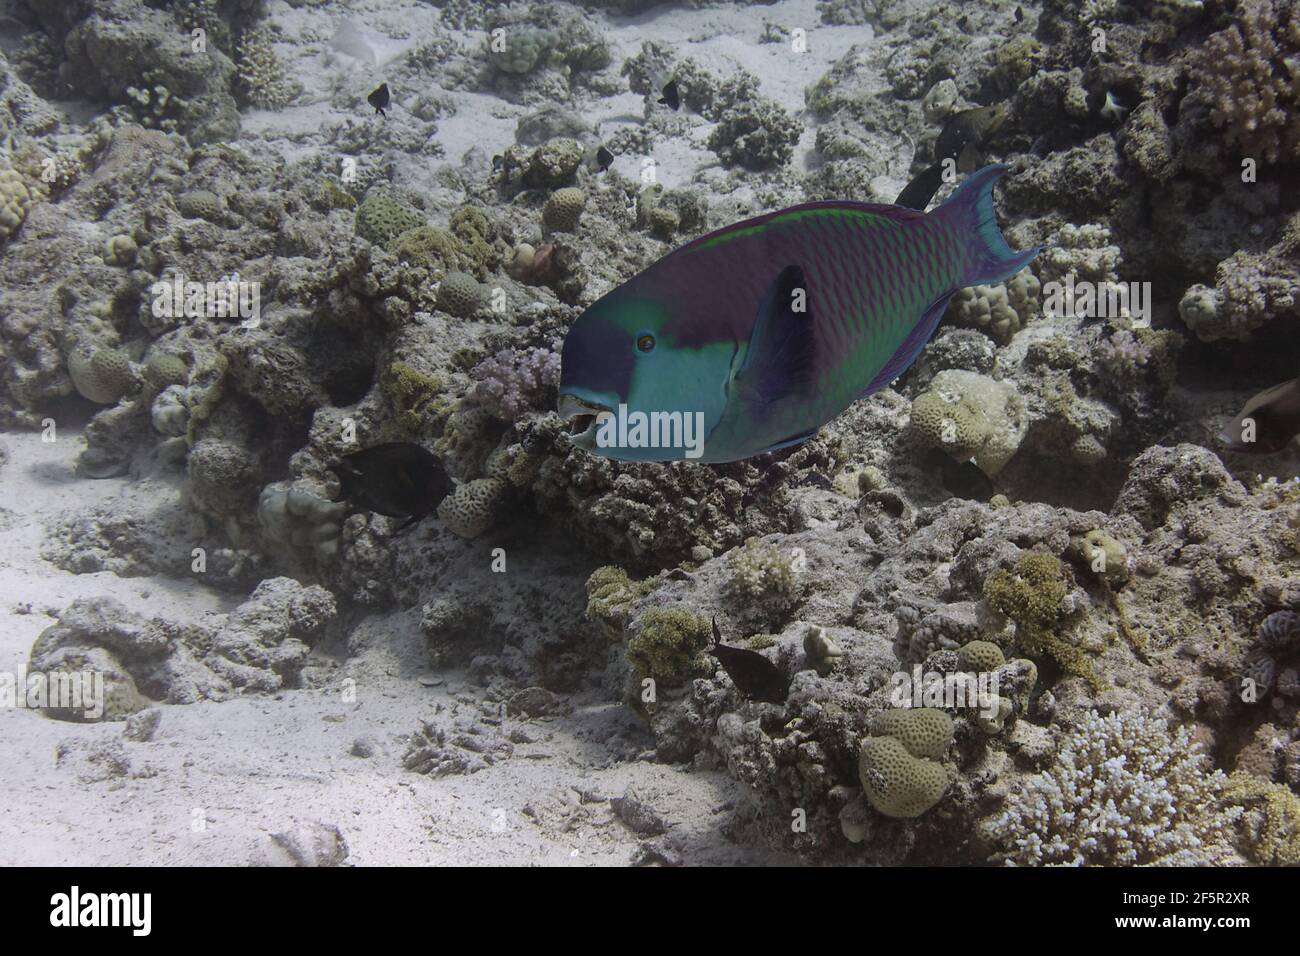 Heavybeak parrotfish (Chlorurus gibbus) in Red Sea Stock Photo